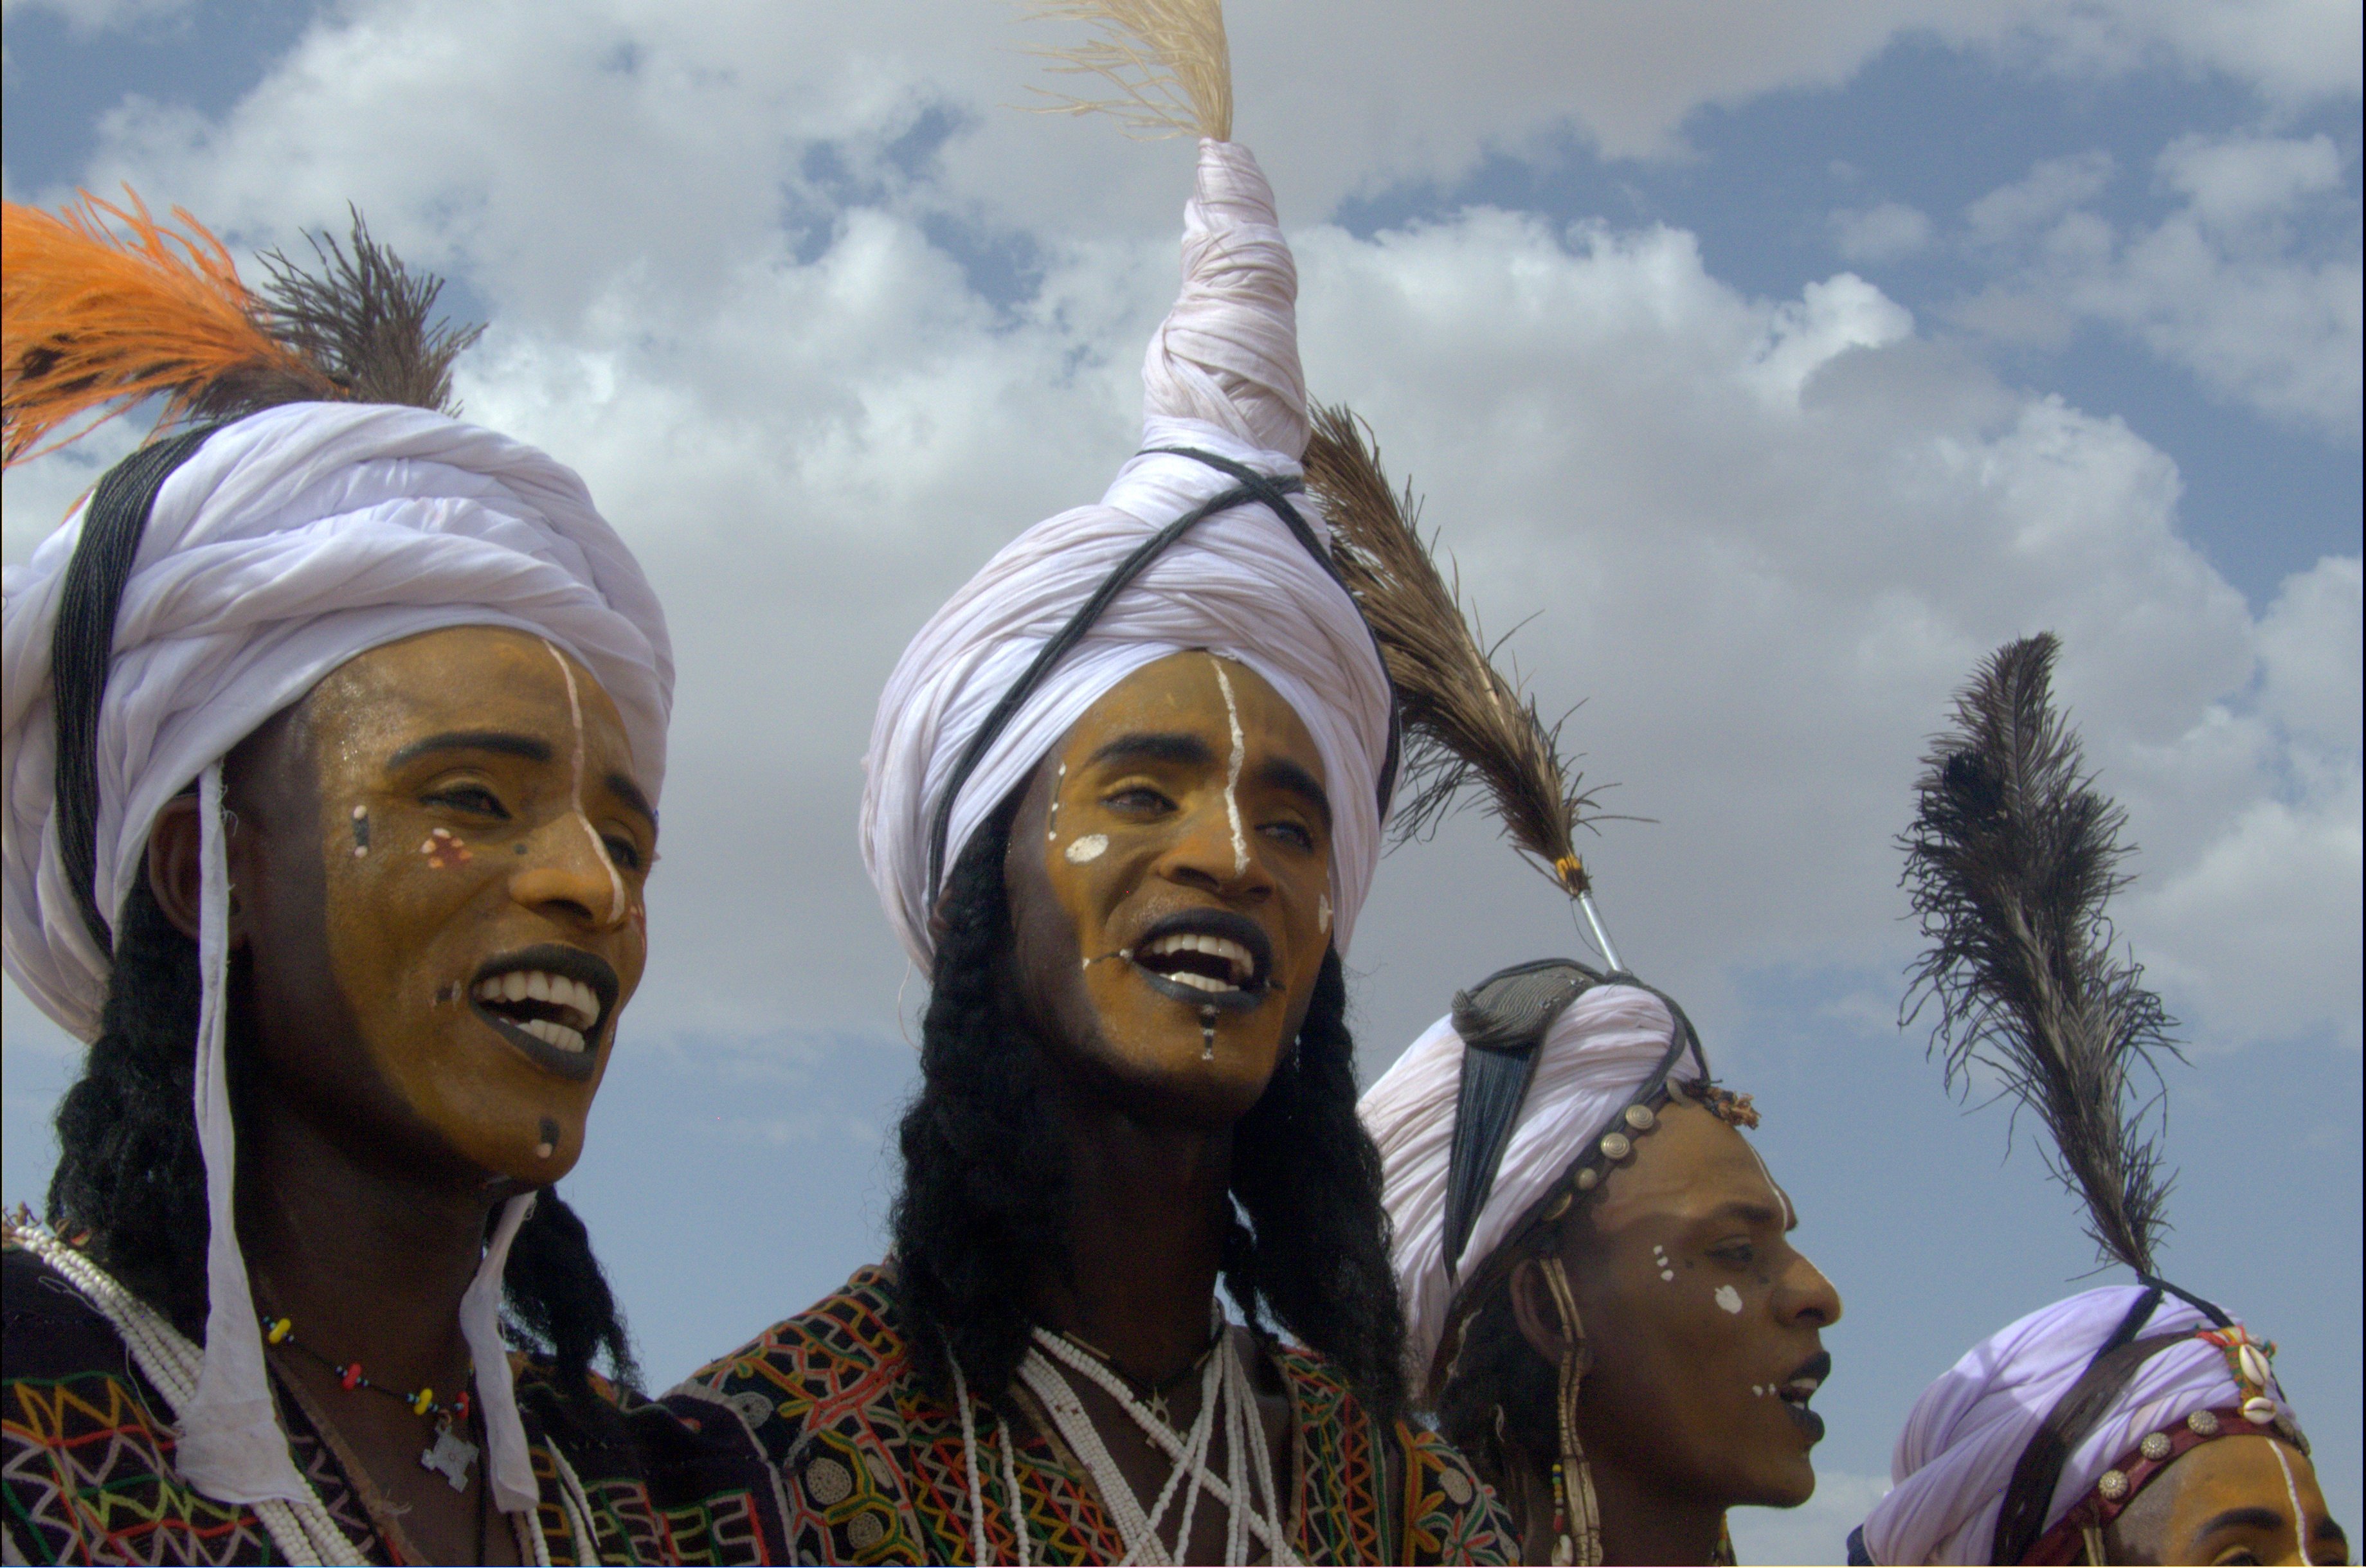 Африканский народ 7 букв. Племя фульбе Африка. Фульбе народ Африки. Жители Африки фулани. Племя фулани фульбе.